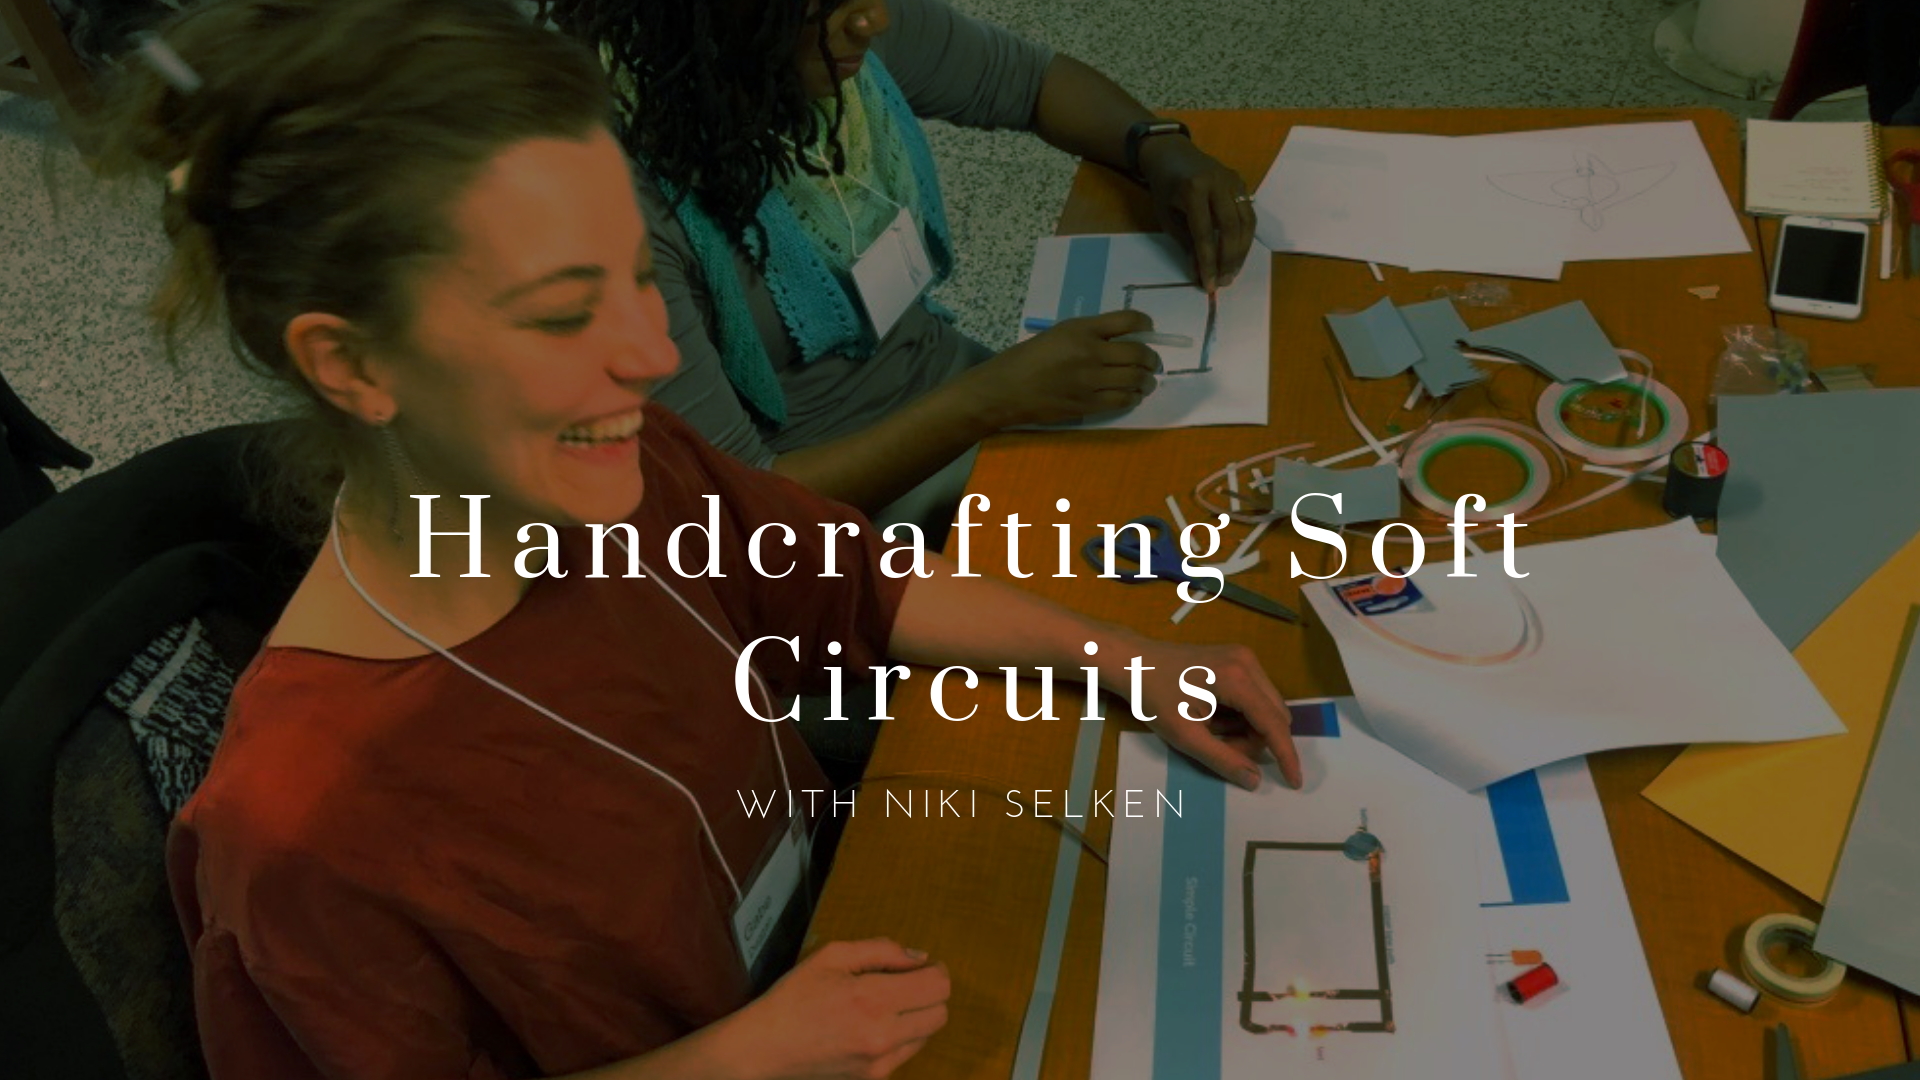 Handcrafting Soft Circuits Workshop